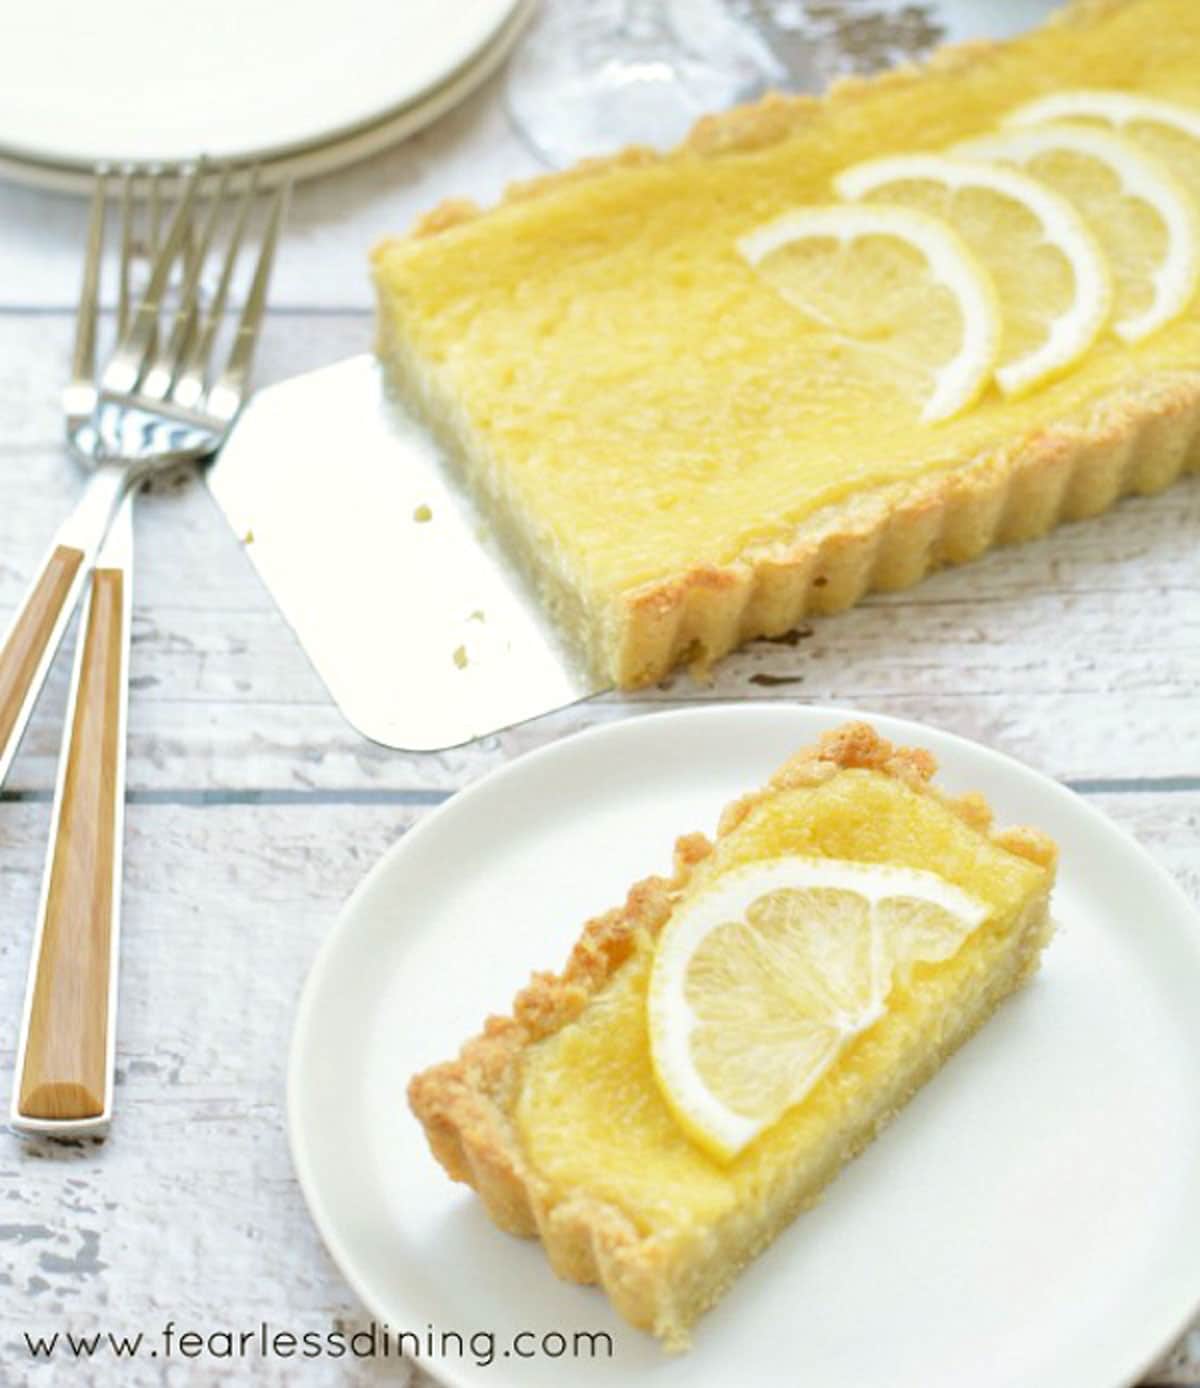 S slice of lemon tart on a white plate next to the whole tart.